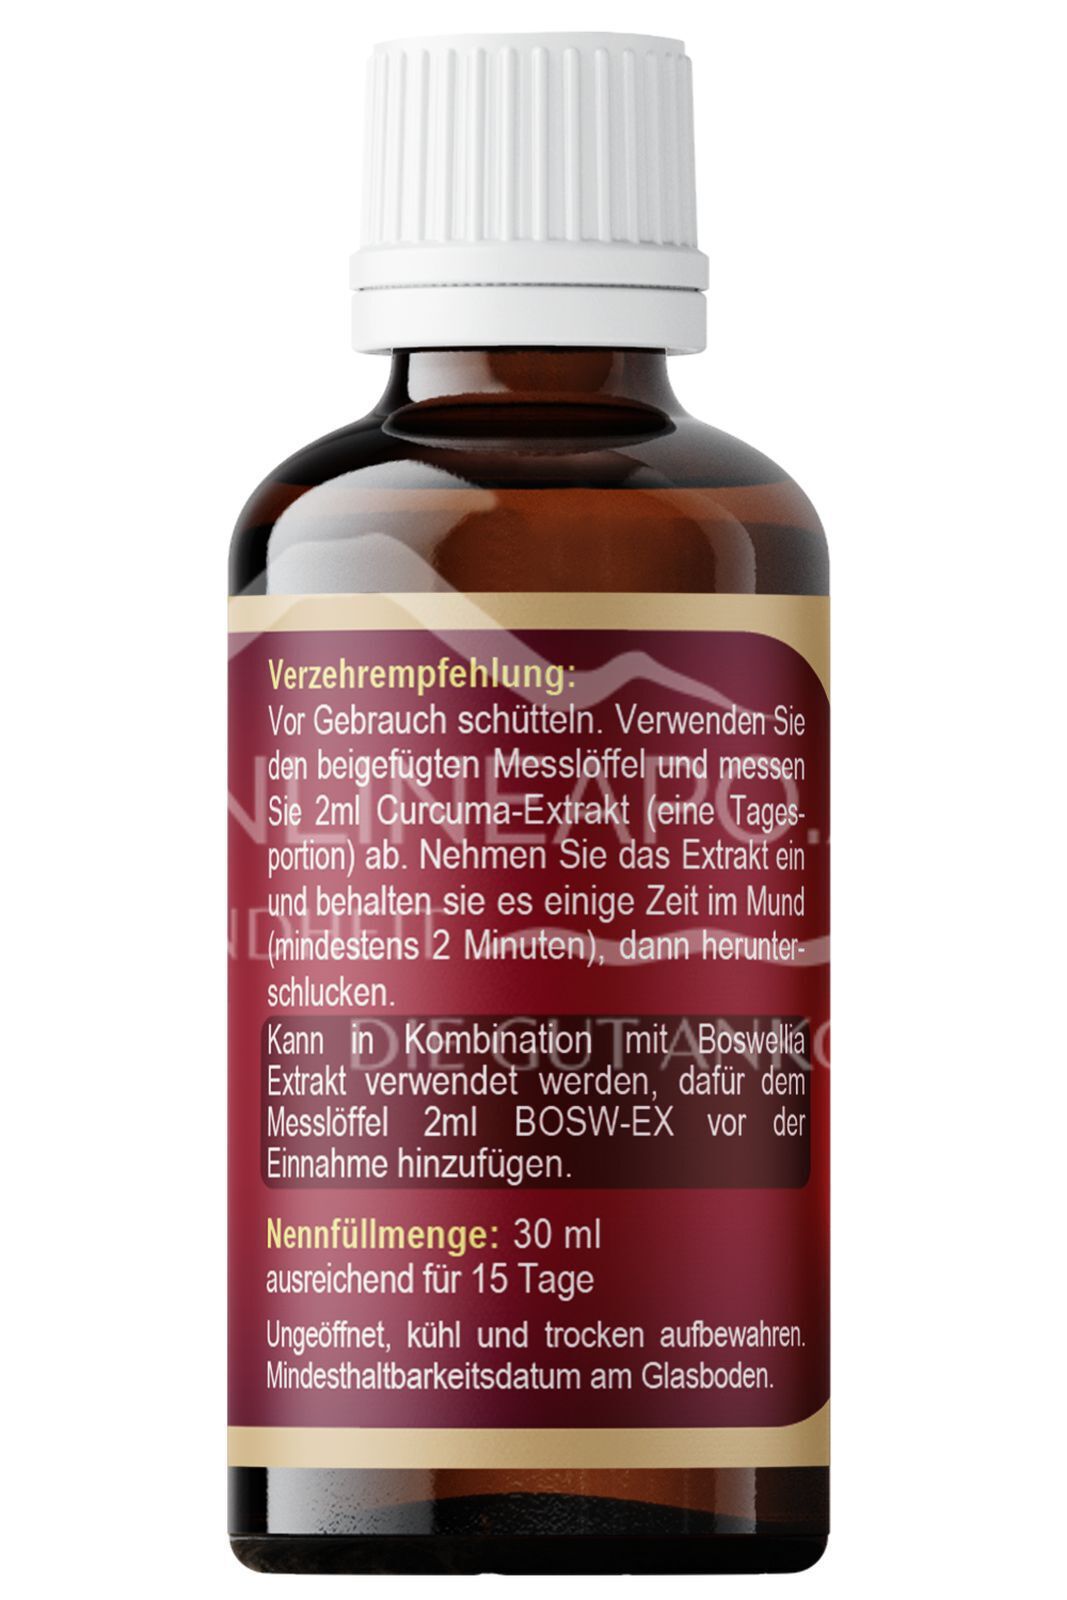 Hondrostrong Curcuma & Boswellia/Weihrauch Öl 2 x 30 ml